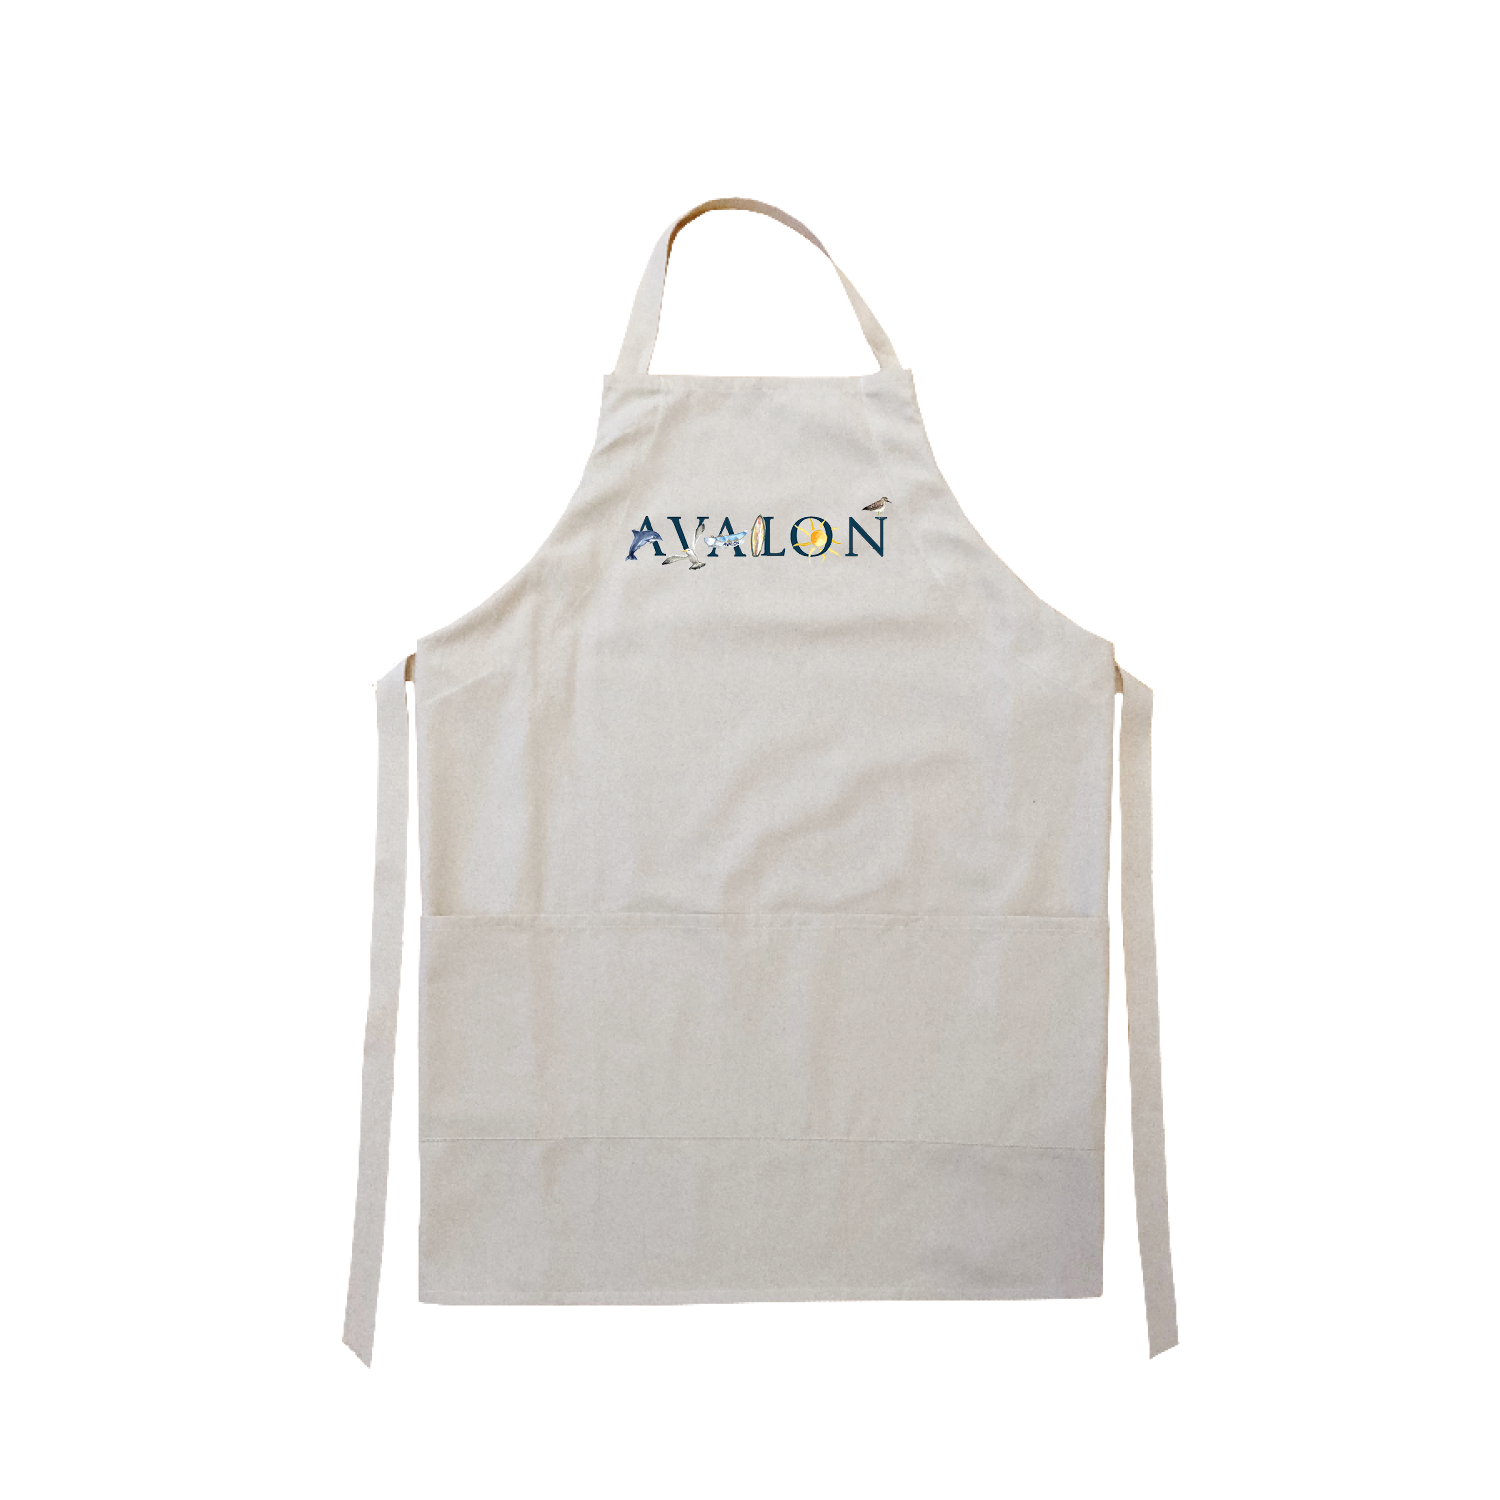 Avalon apron